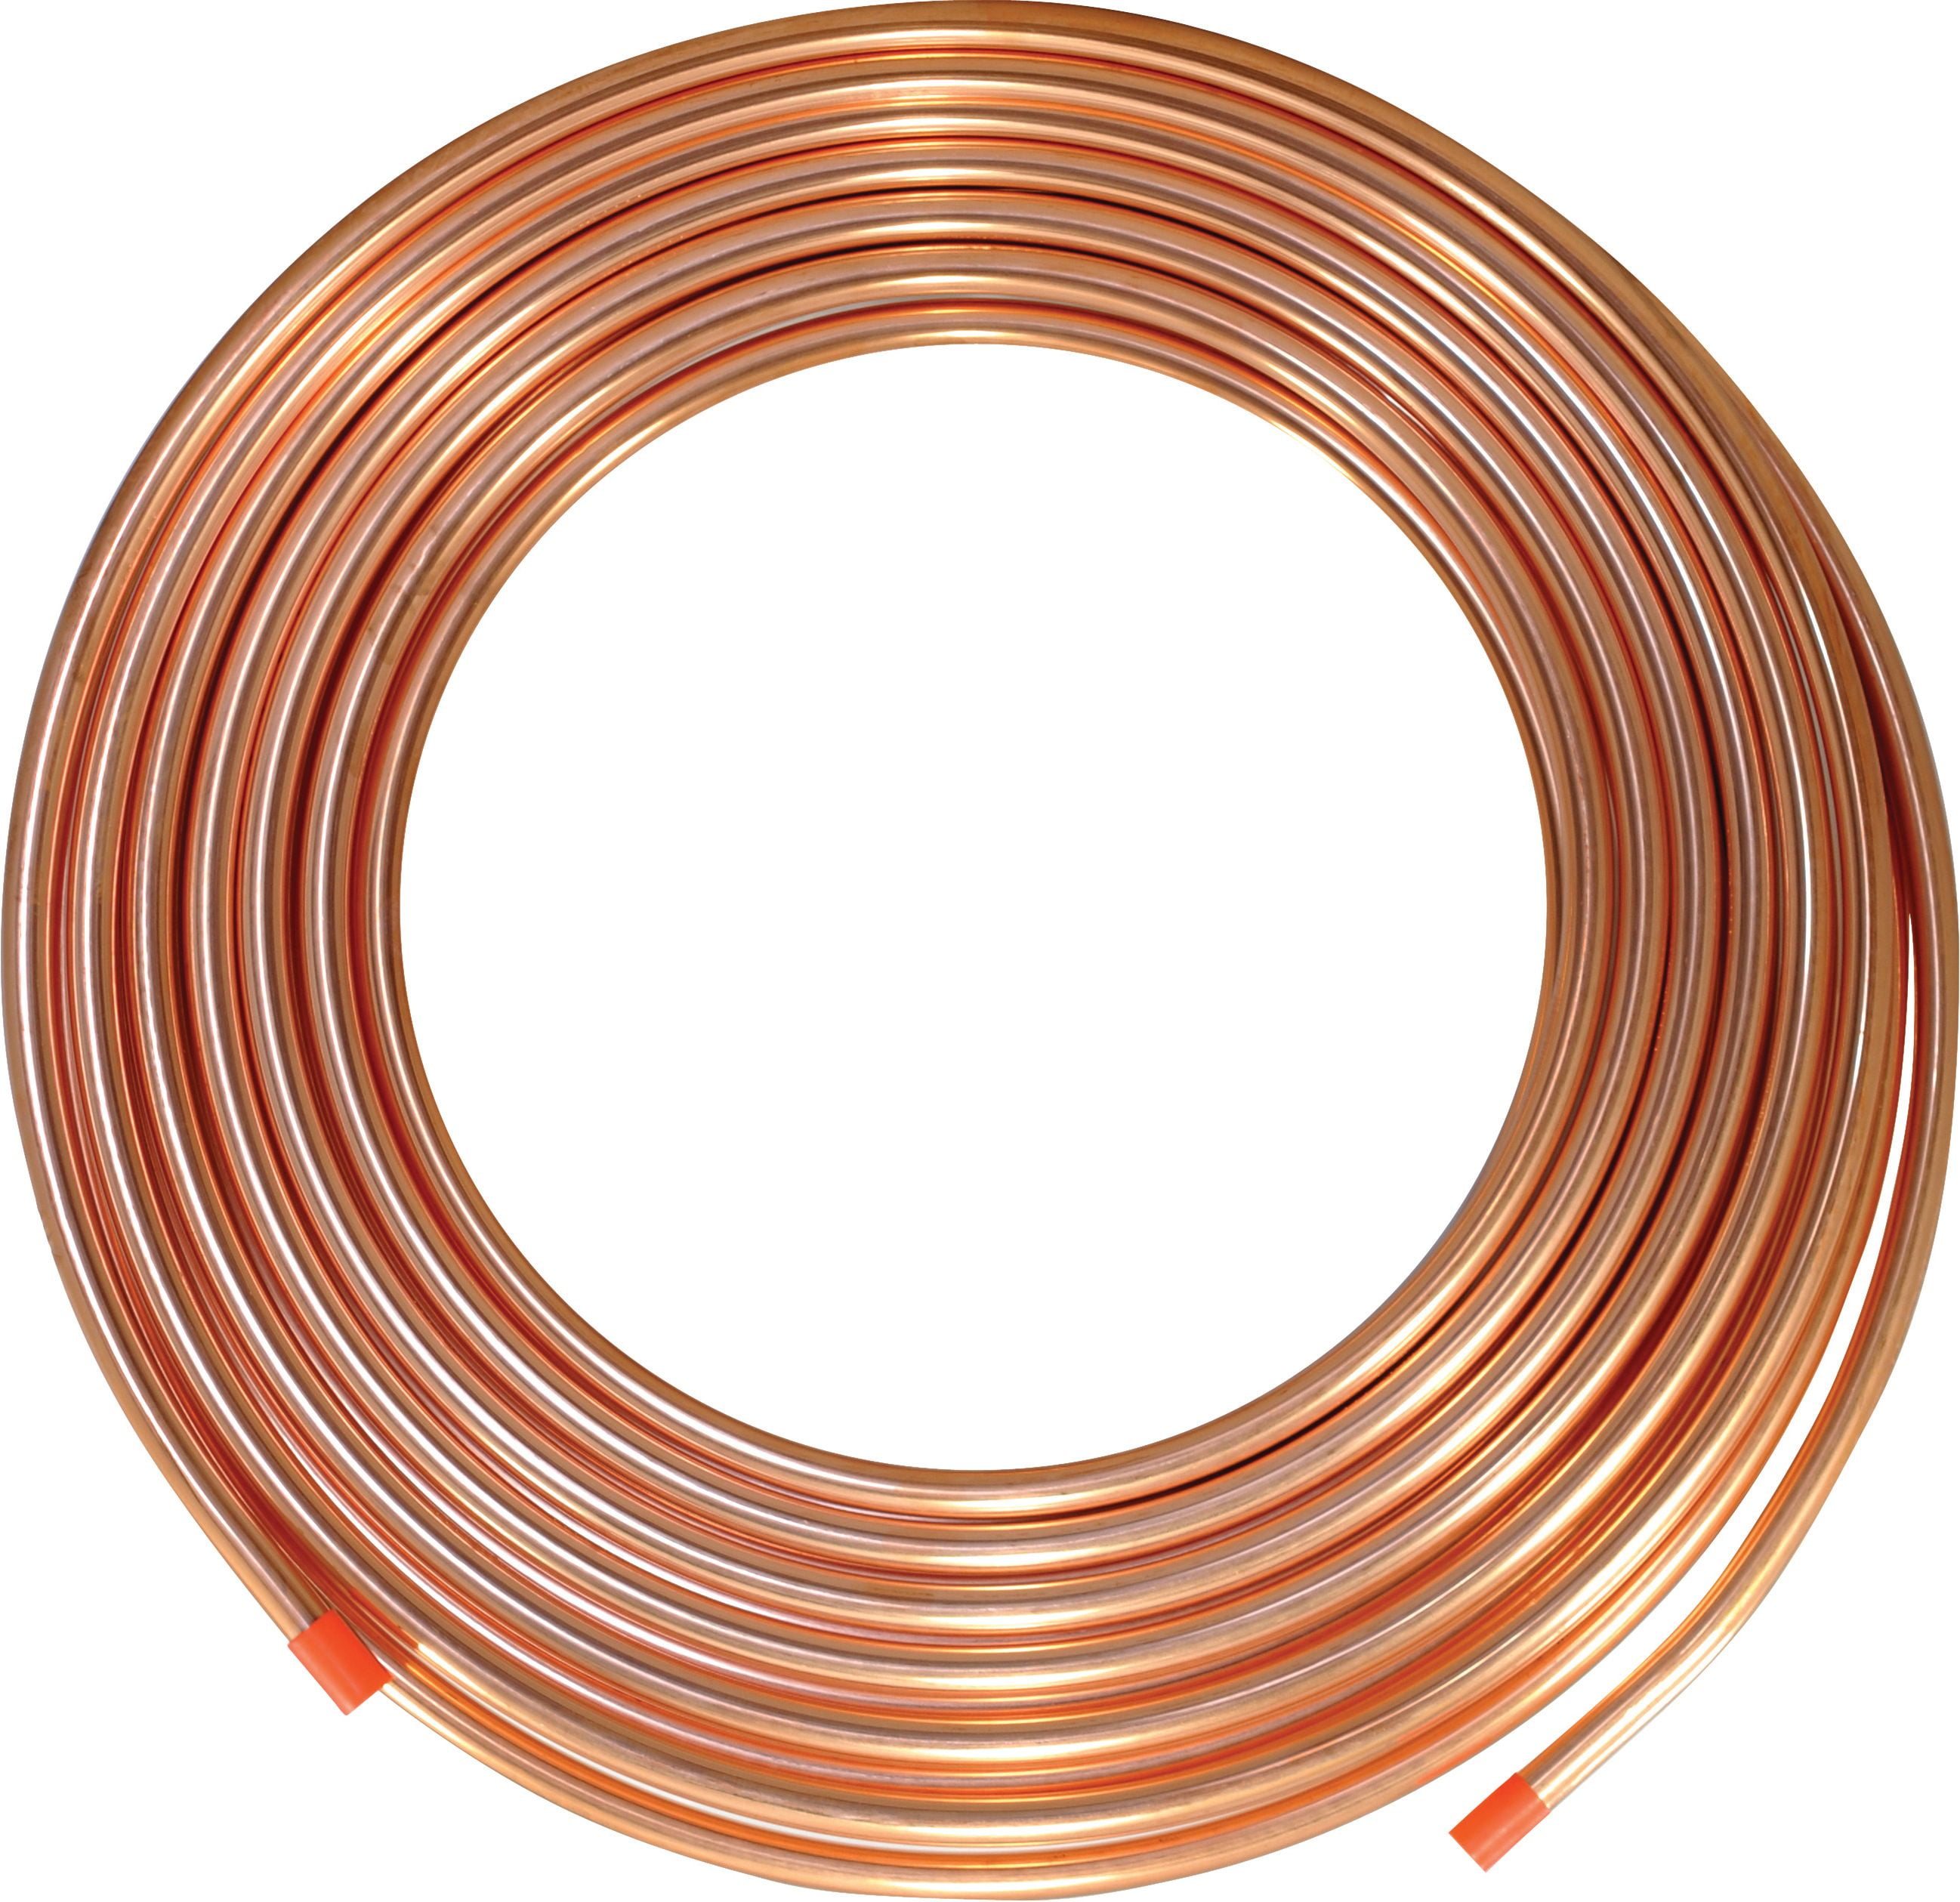 7-8-od-copper-refrigeration-acr-tubing-50-ft-walmart-walmart